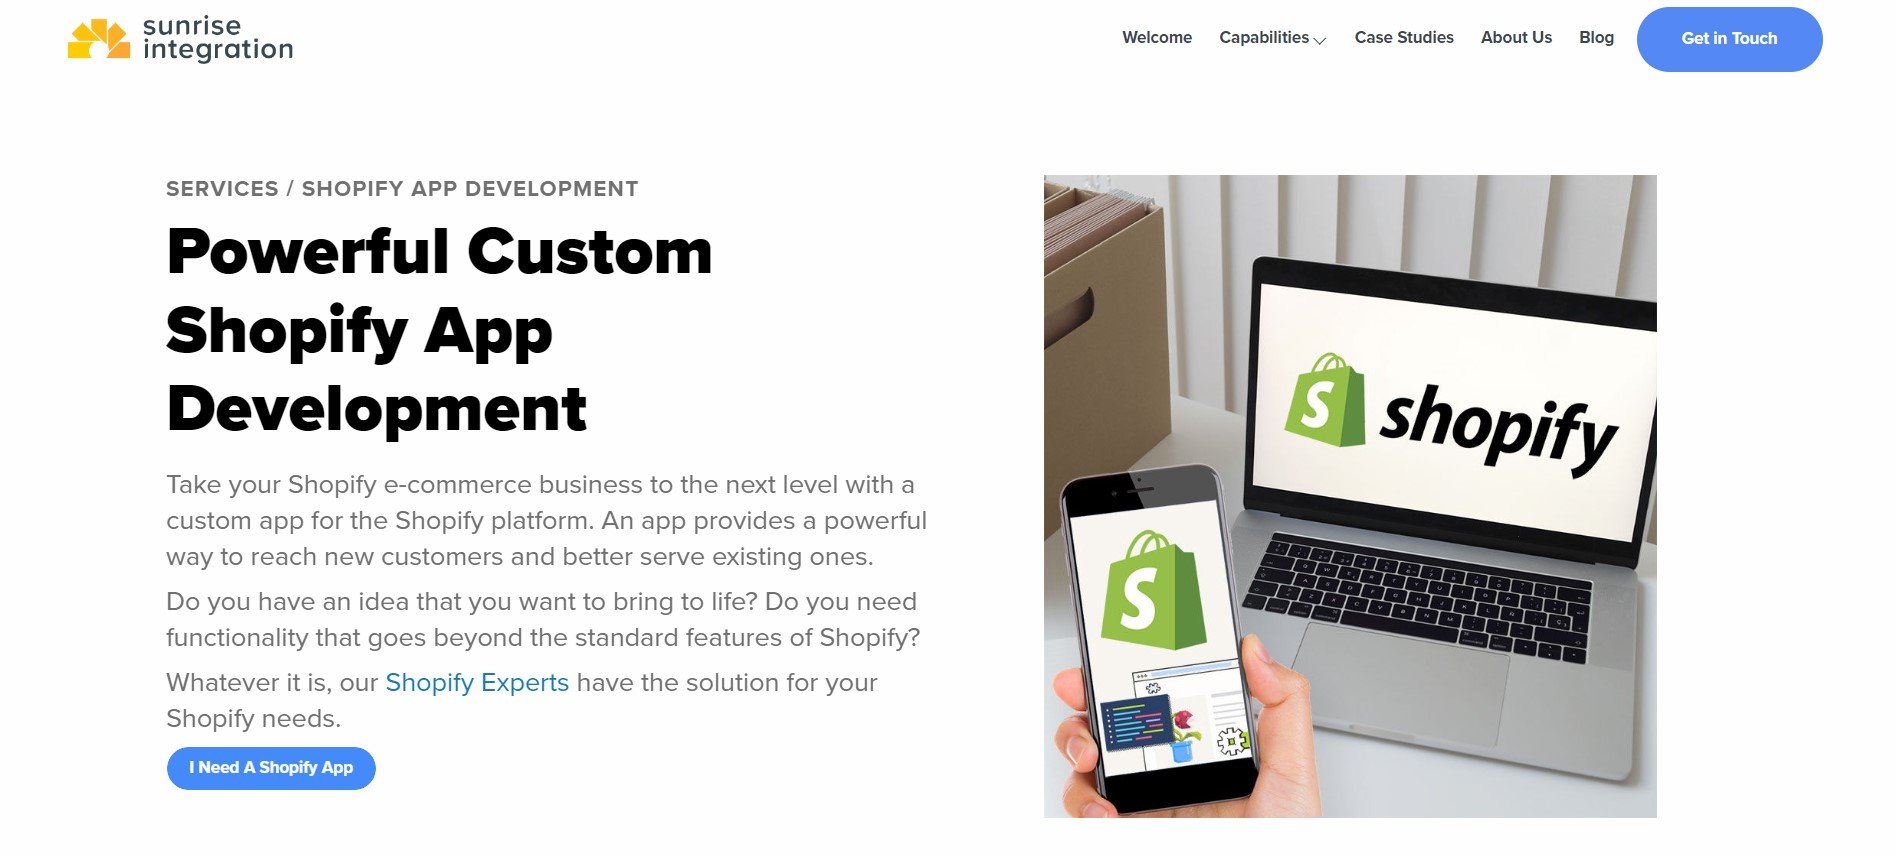 Shopify eCommerce web development: Sunrise Integration